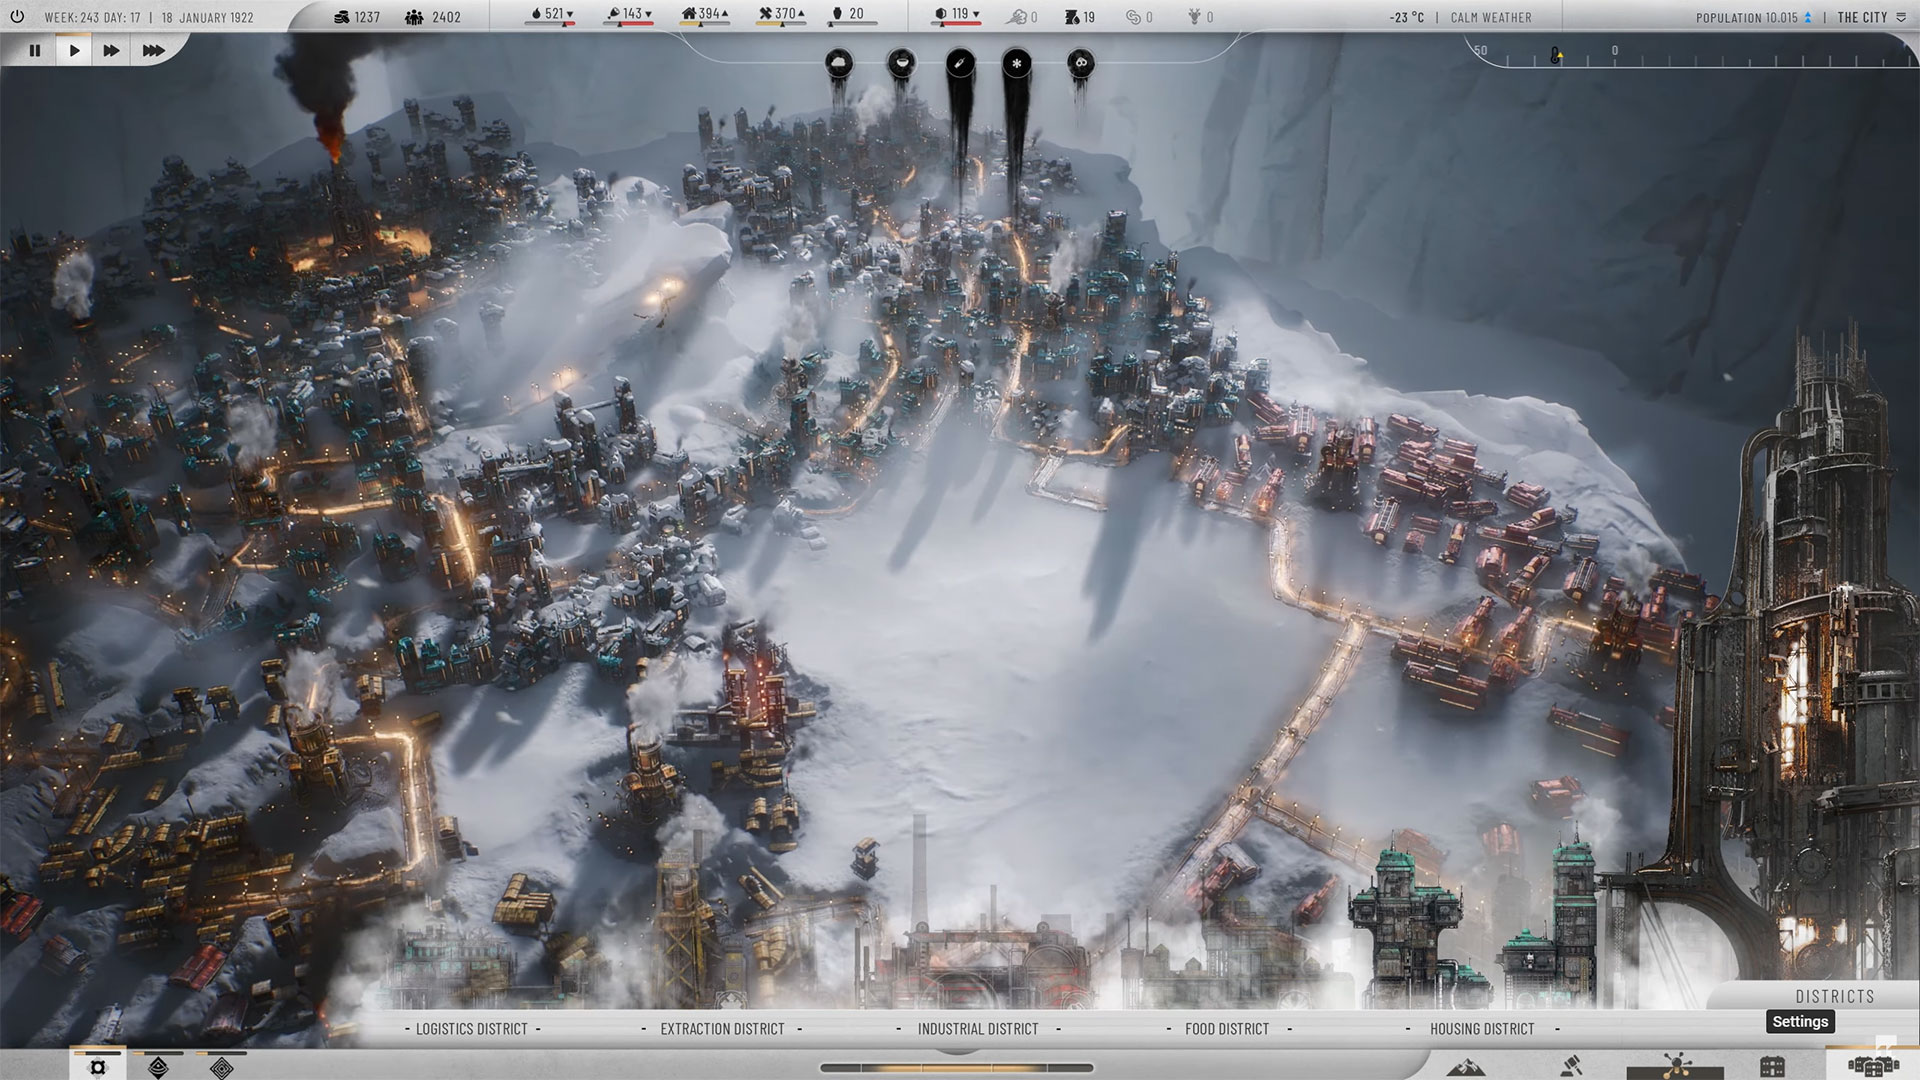 Developer 11 bit studios has revealed the first gameplay trailer for Frostpunk 2